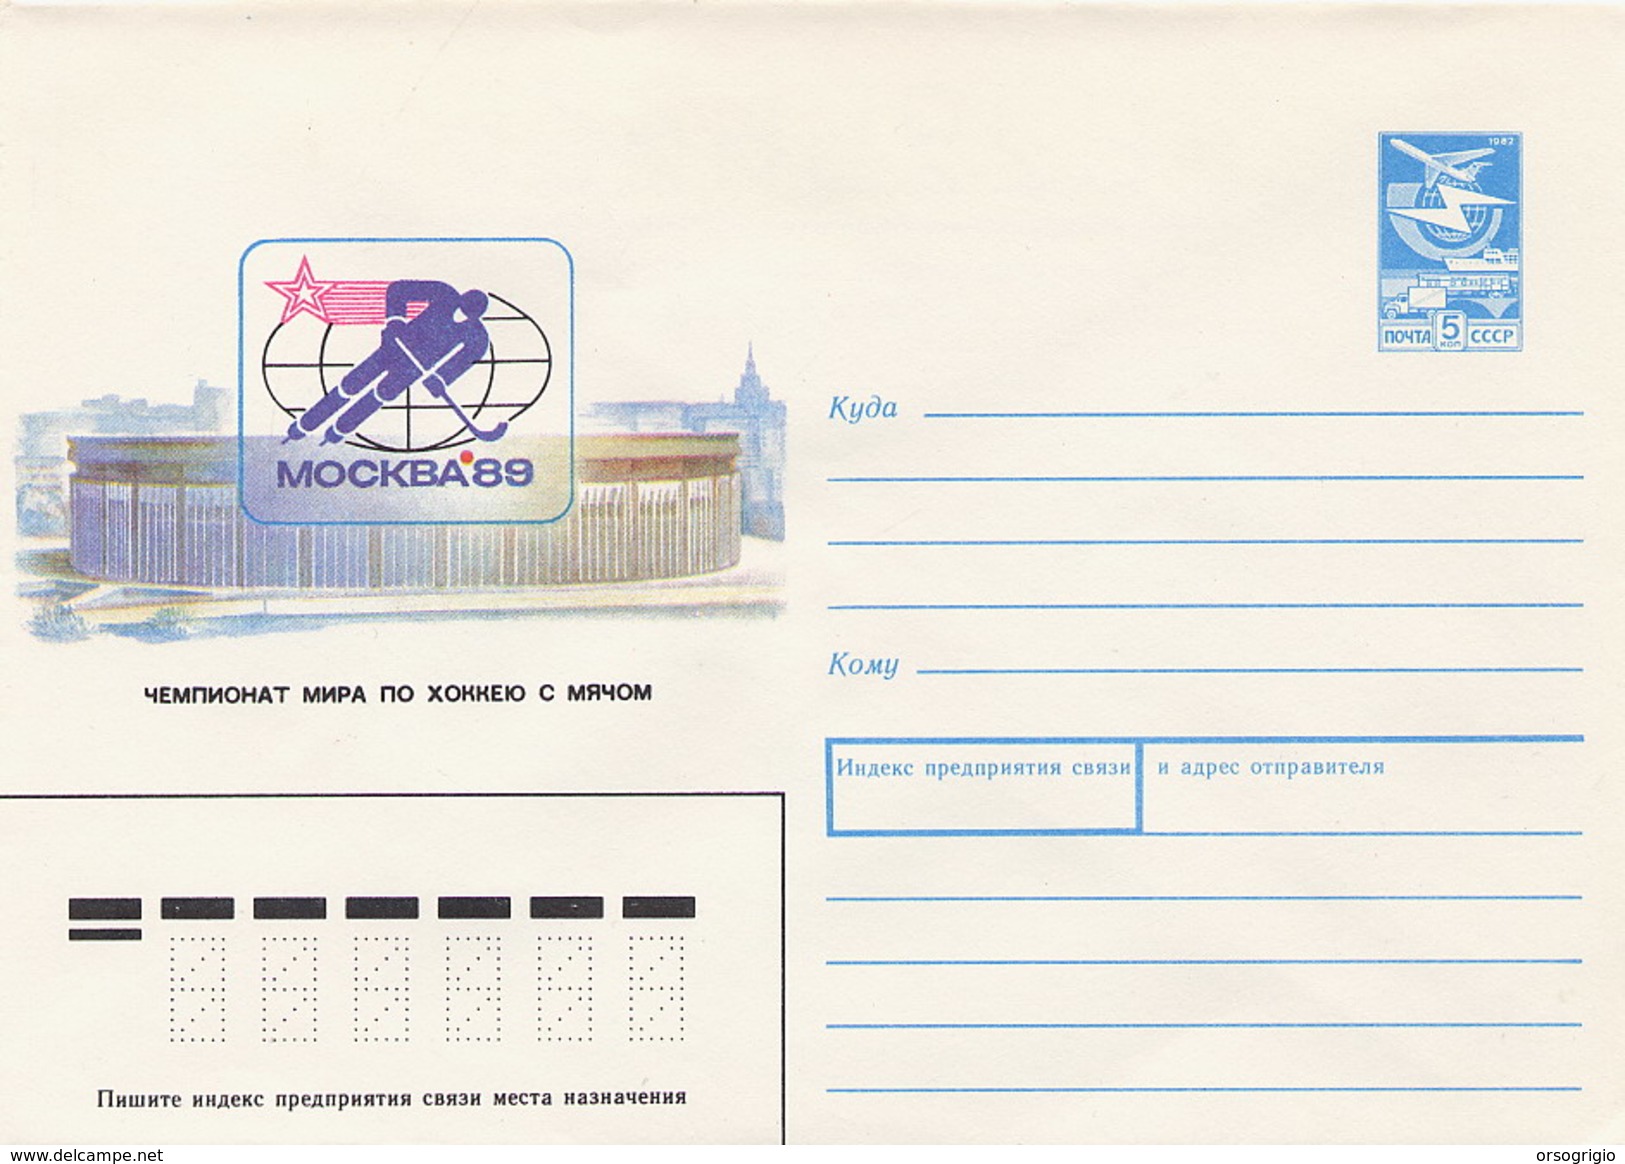 RUSSIA - HOCKEY ON ICE - Intero Postale - Hockey (su Ghiaccio)